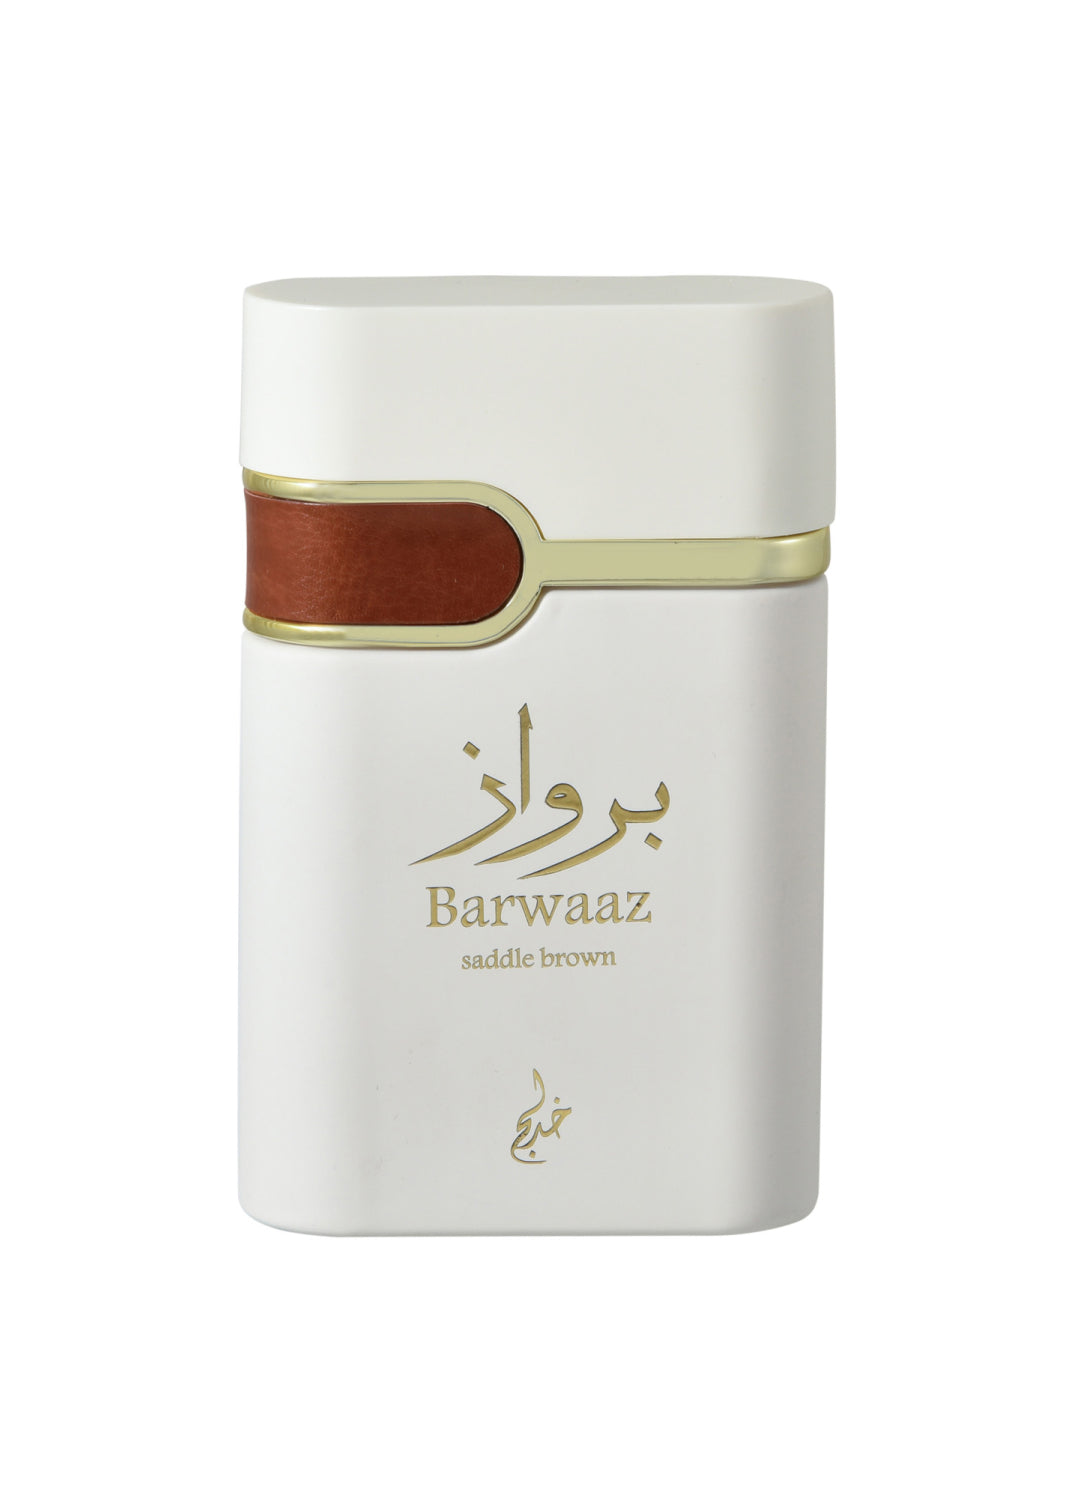 Barwaaz Saddle Brown Eau de Parfum - 100ml for Men's by Khadlaj Perfumes